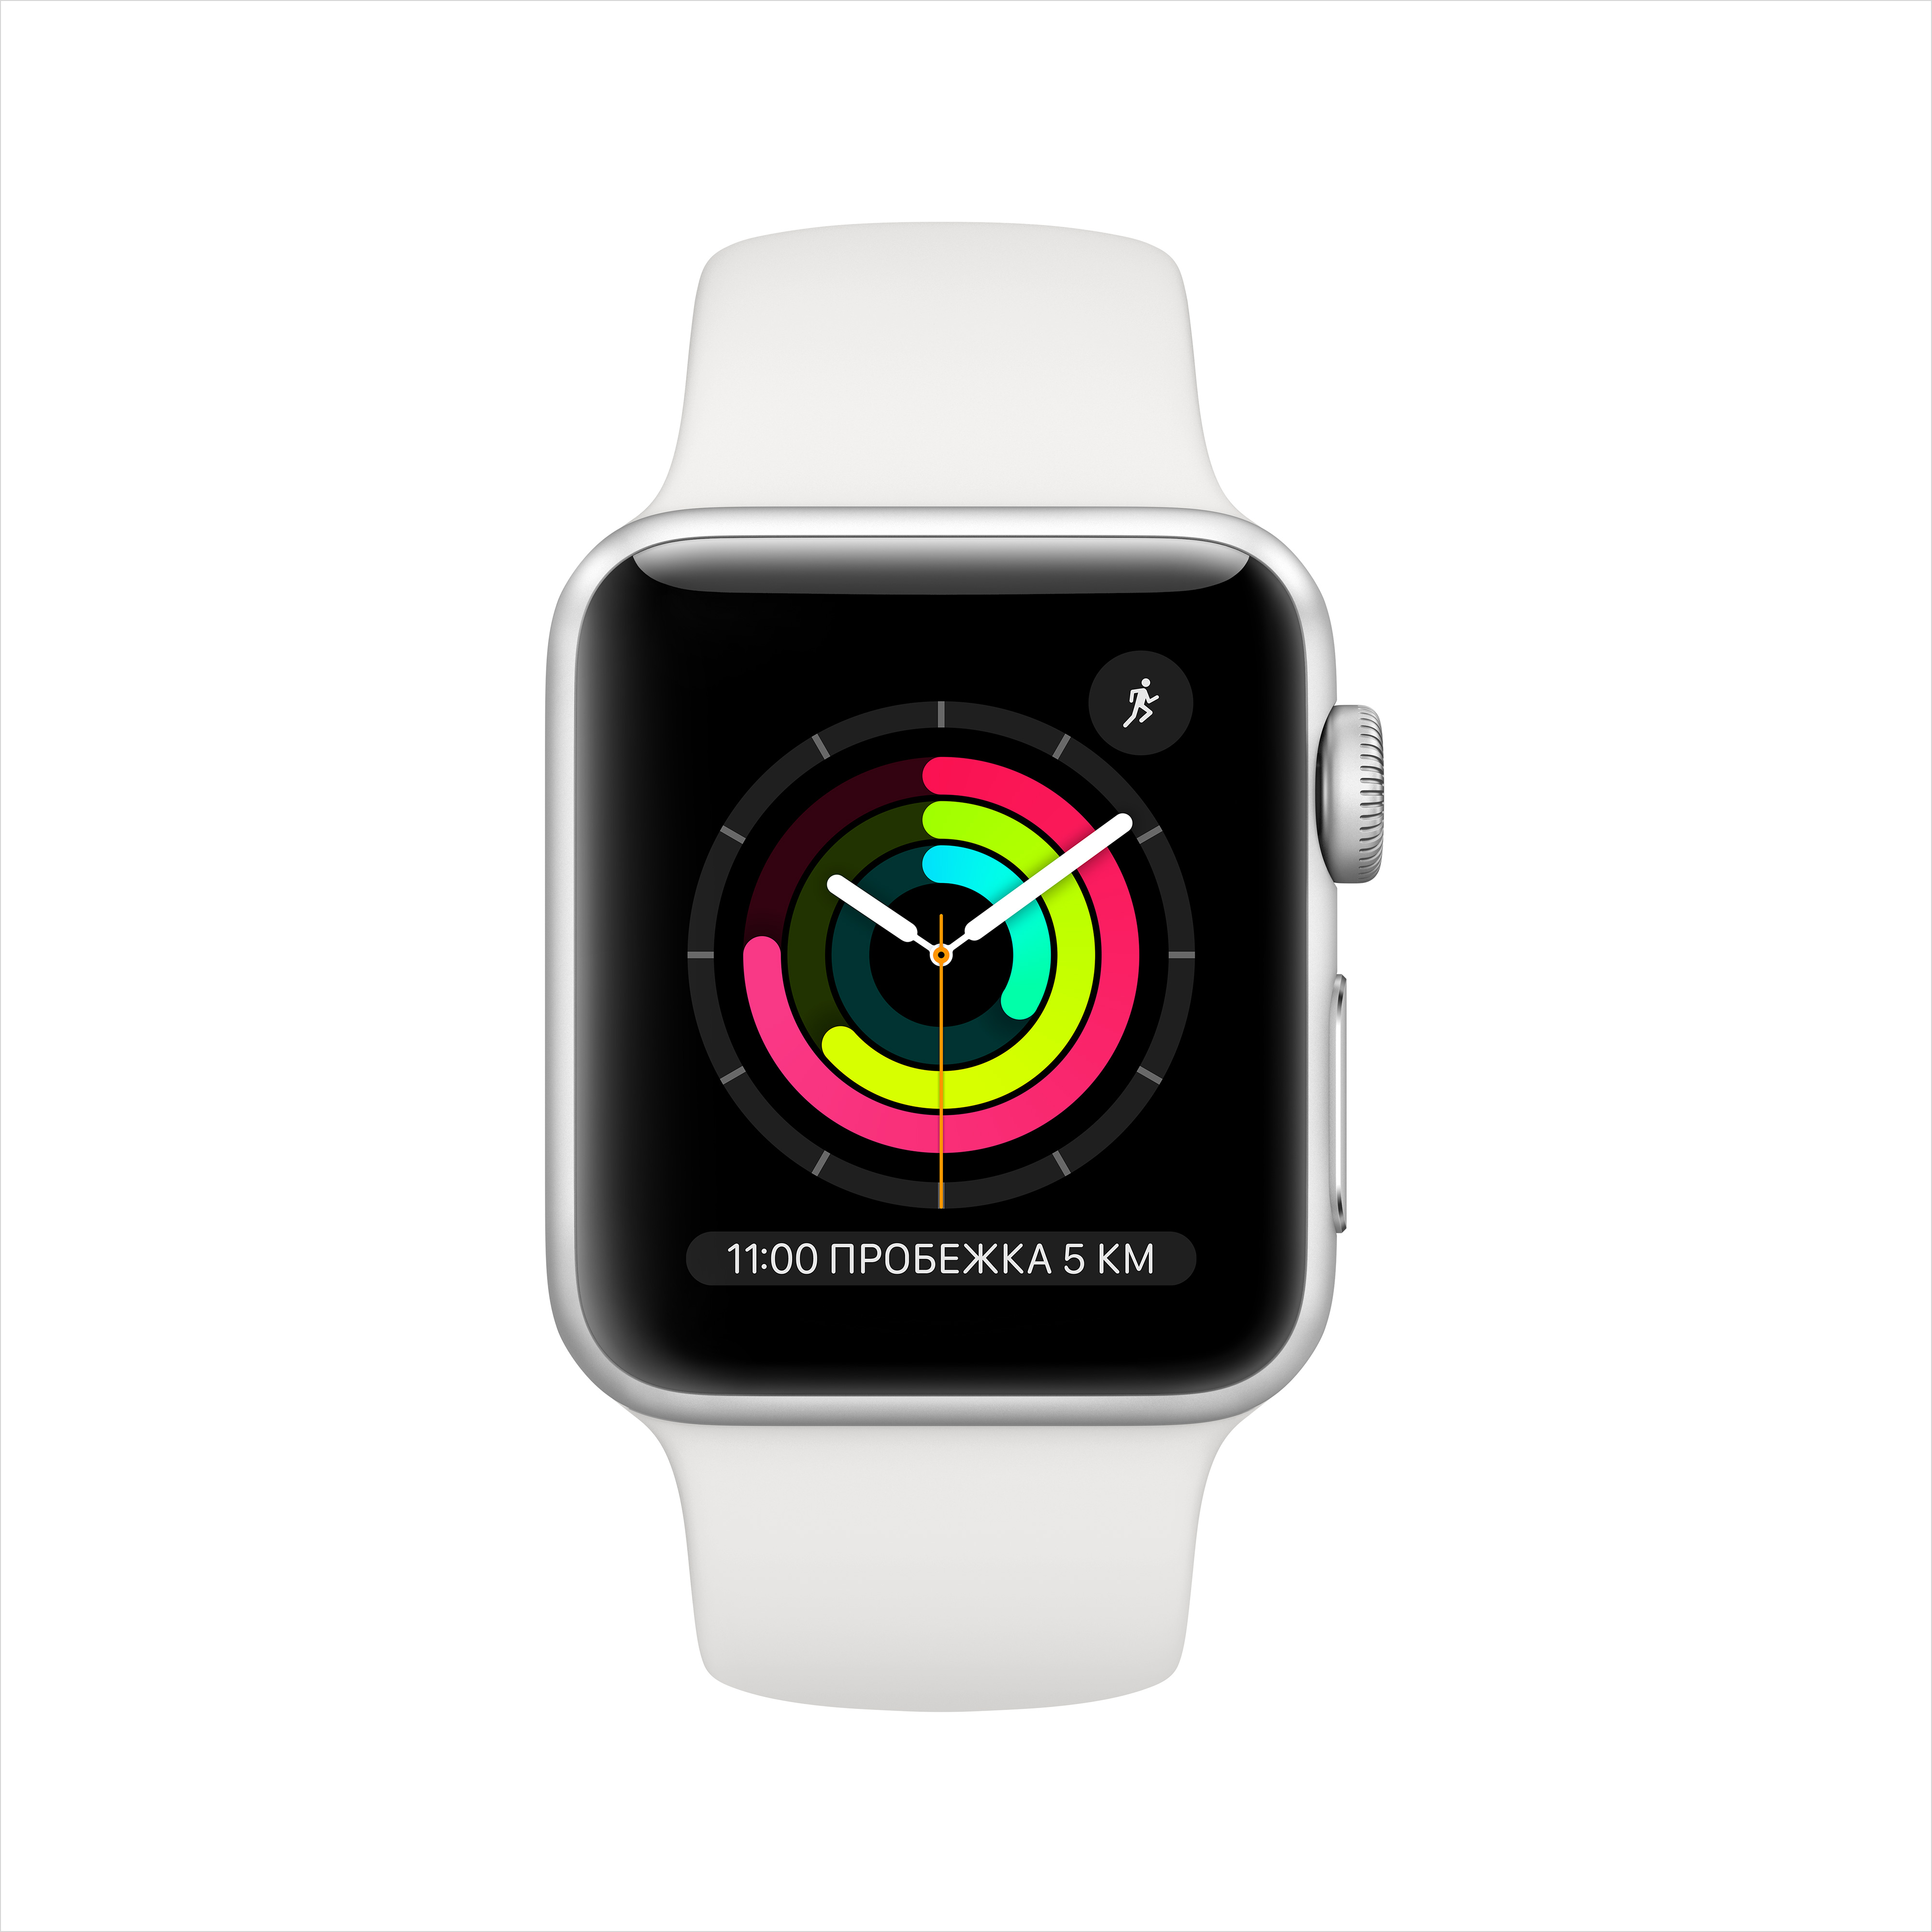 Смарт часы для айфона купить. Apple watch Series 3 38mm. Apple watch Series 3 42 мм. Apple watch 3 38 mm Silver. Часы эпл вотч 7.